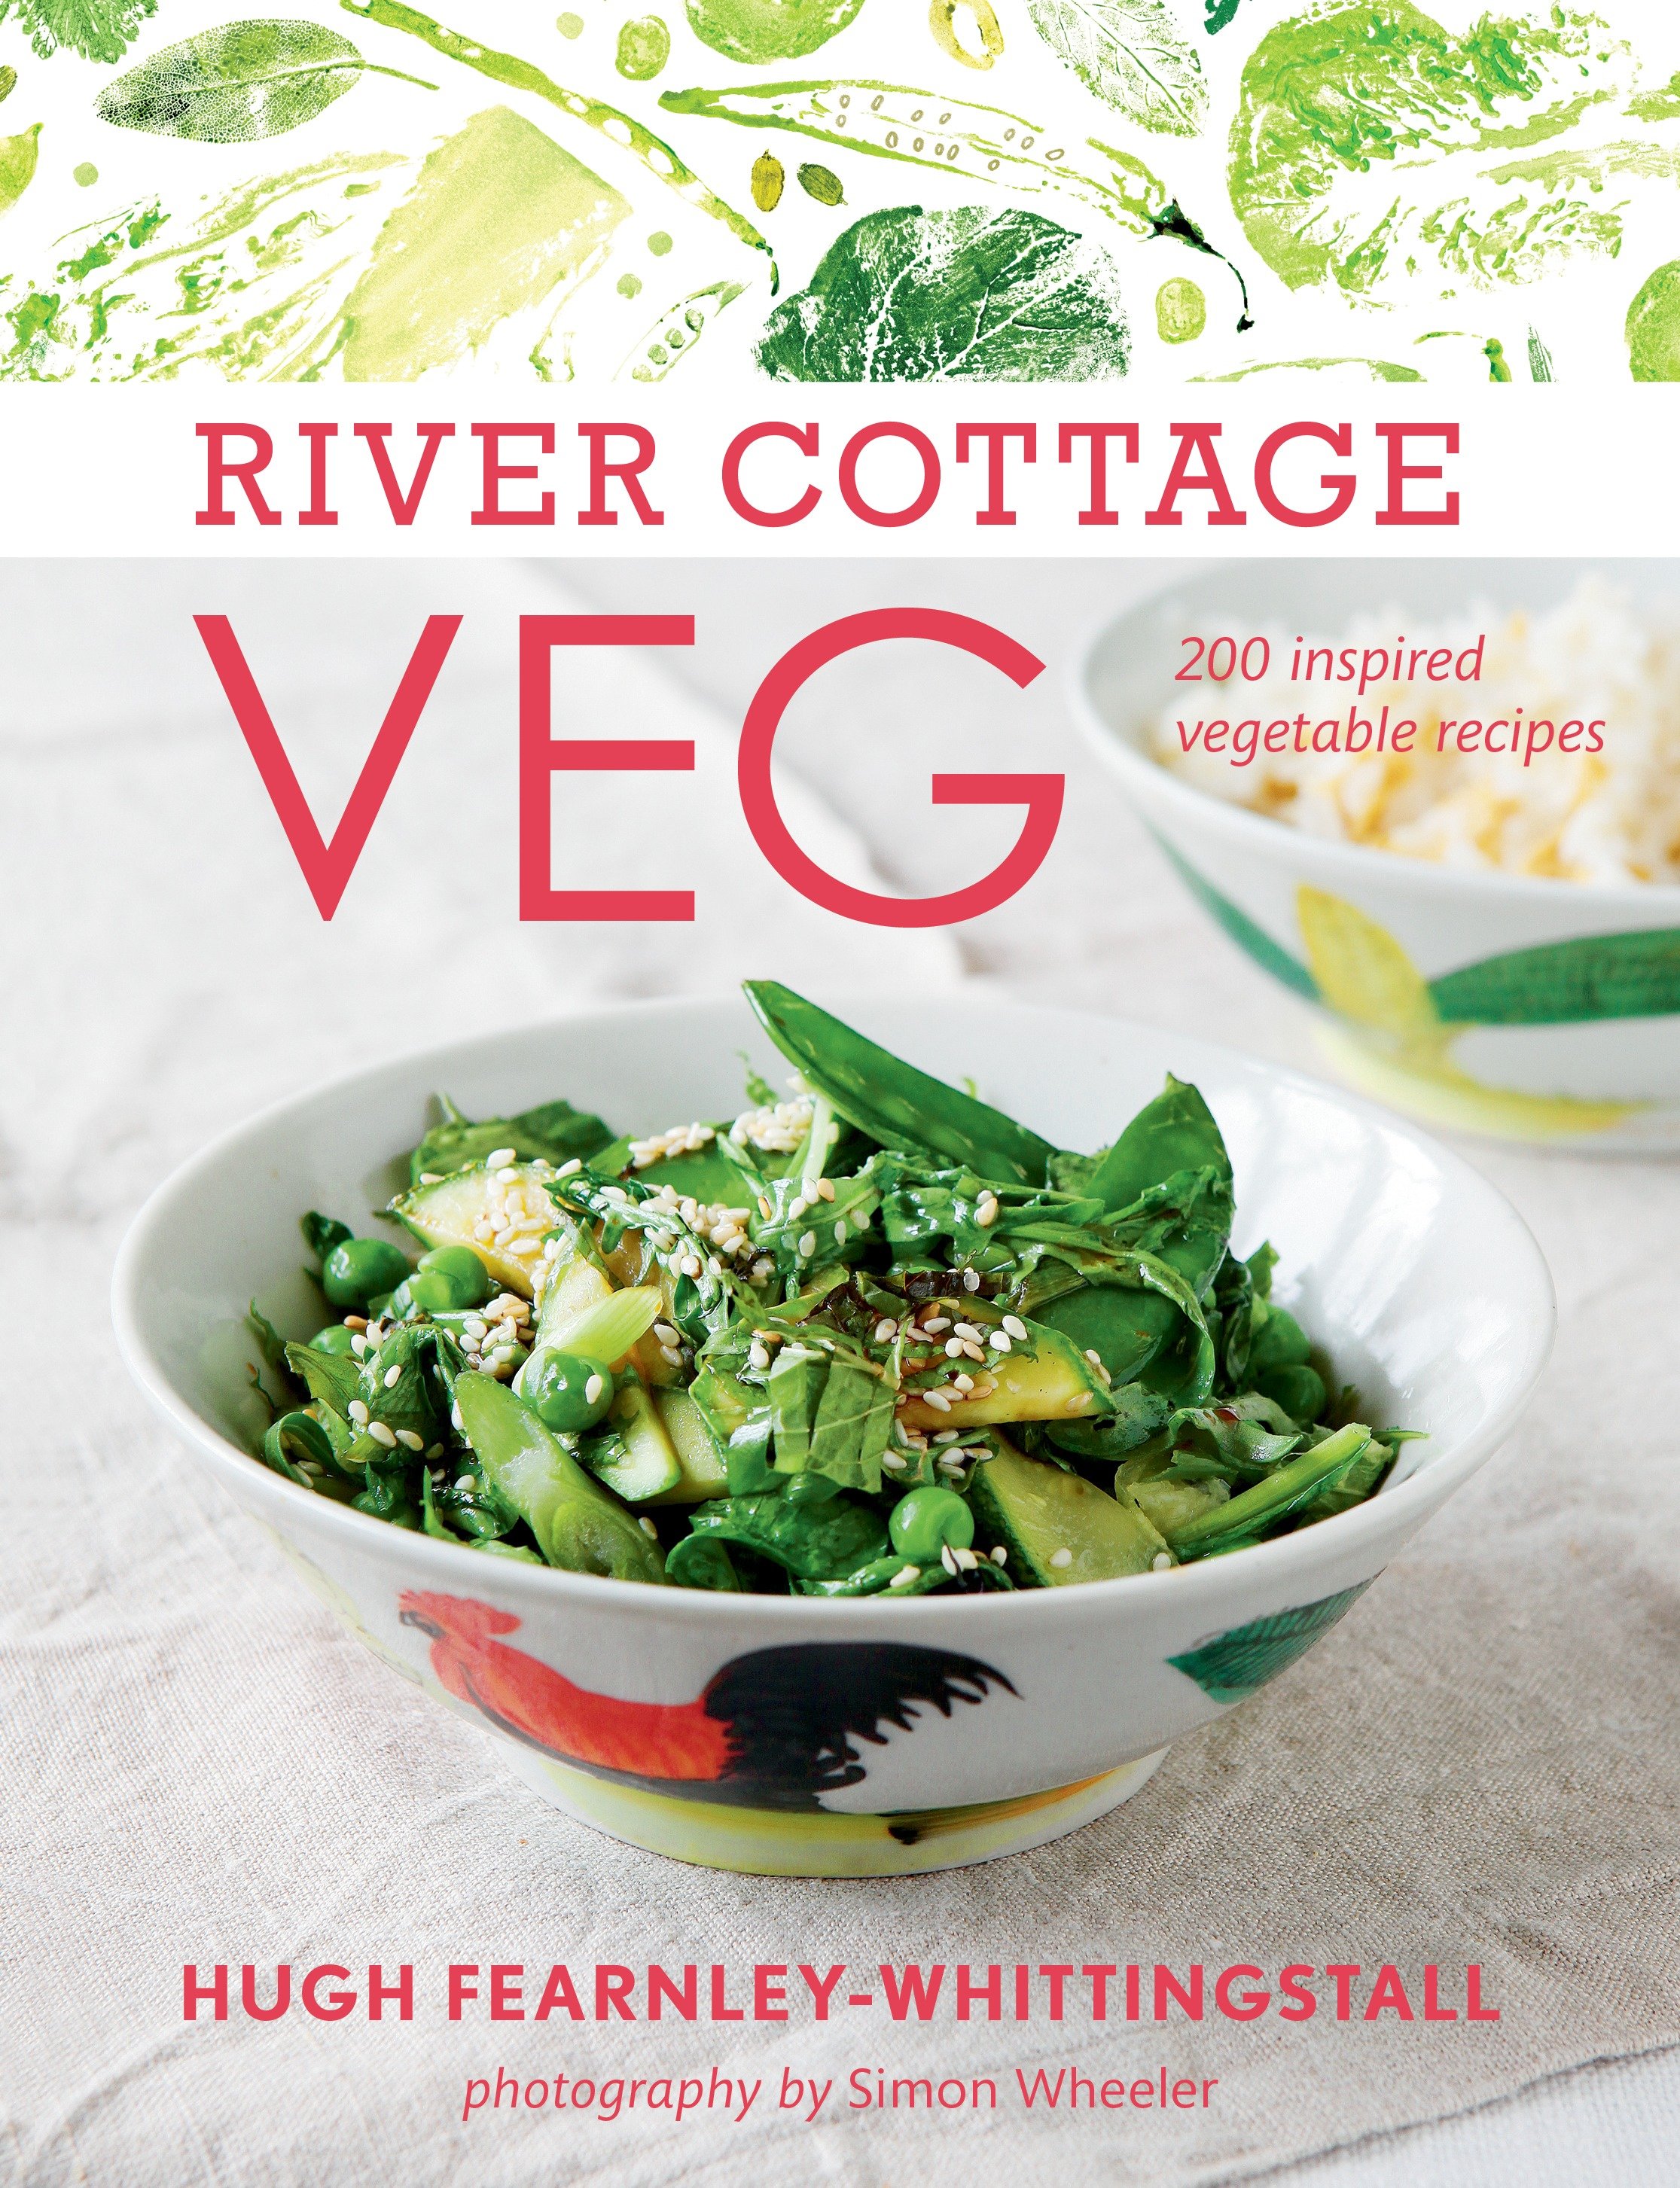 River cottage veg 200 inspired vegetable recipes cover image